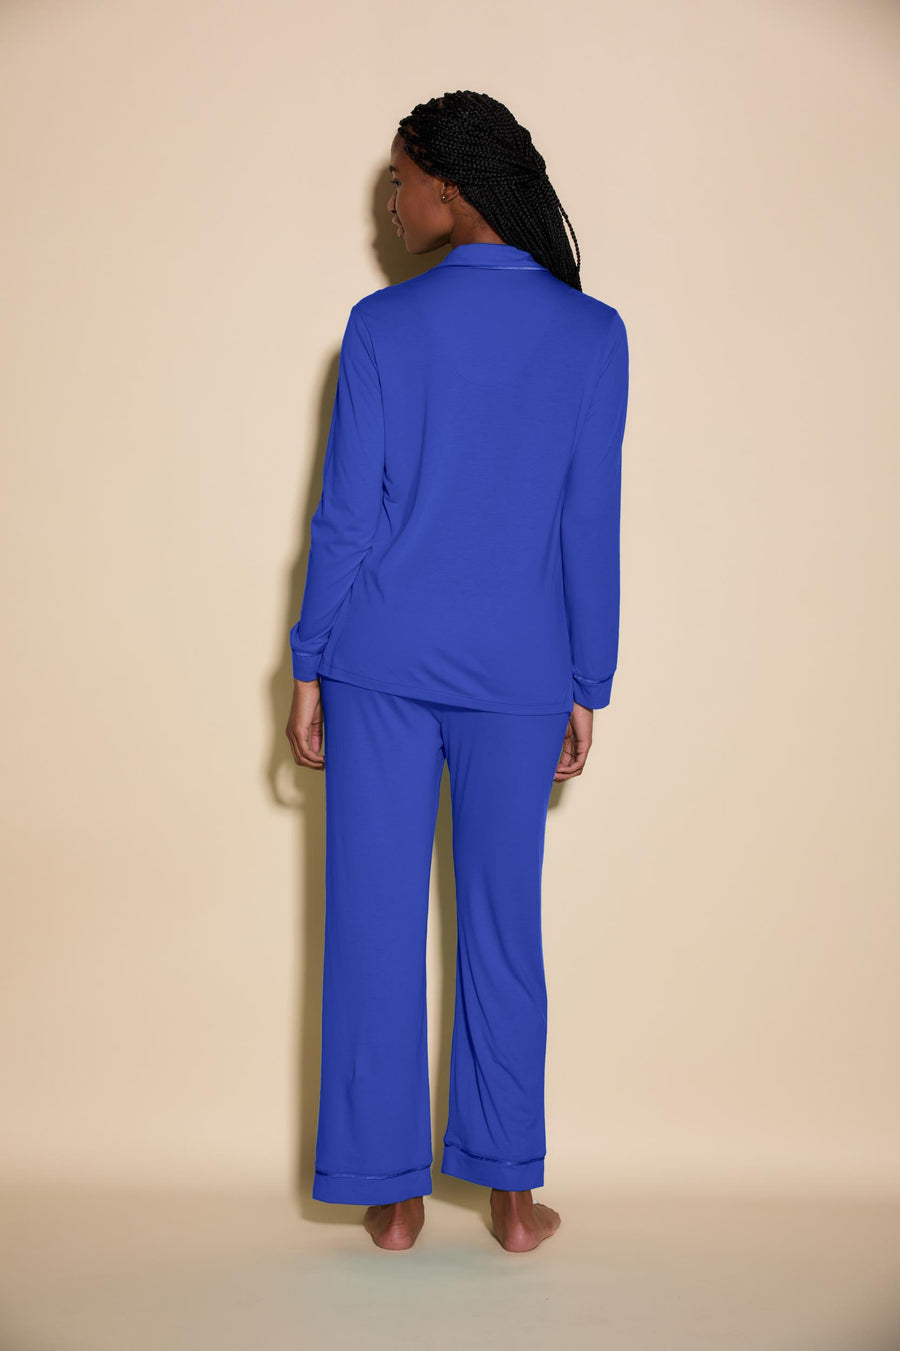 Blue Set - Bella Long Sleeve Top & Pant Pajama Set